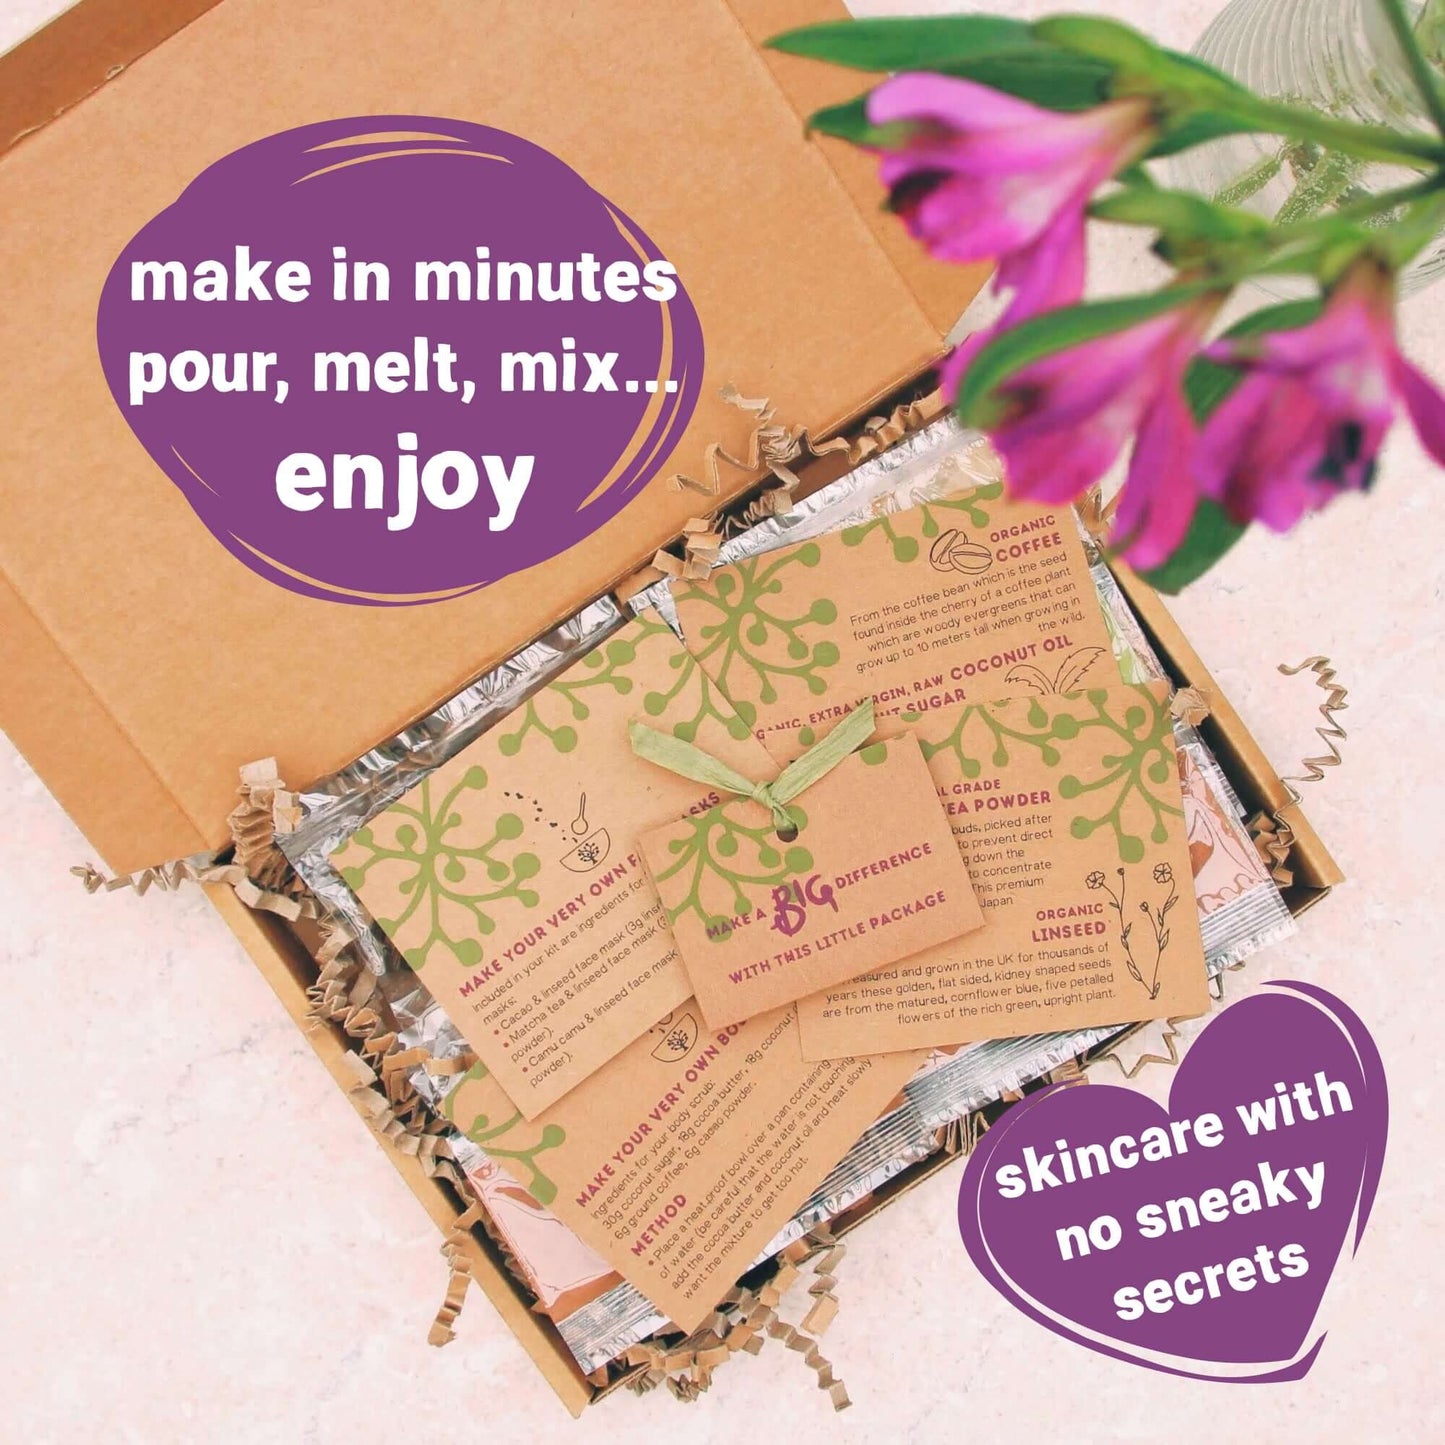 make your own skincare kit inside letterbox gift box